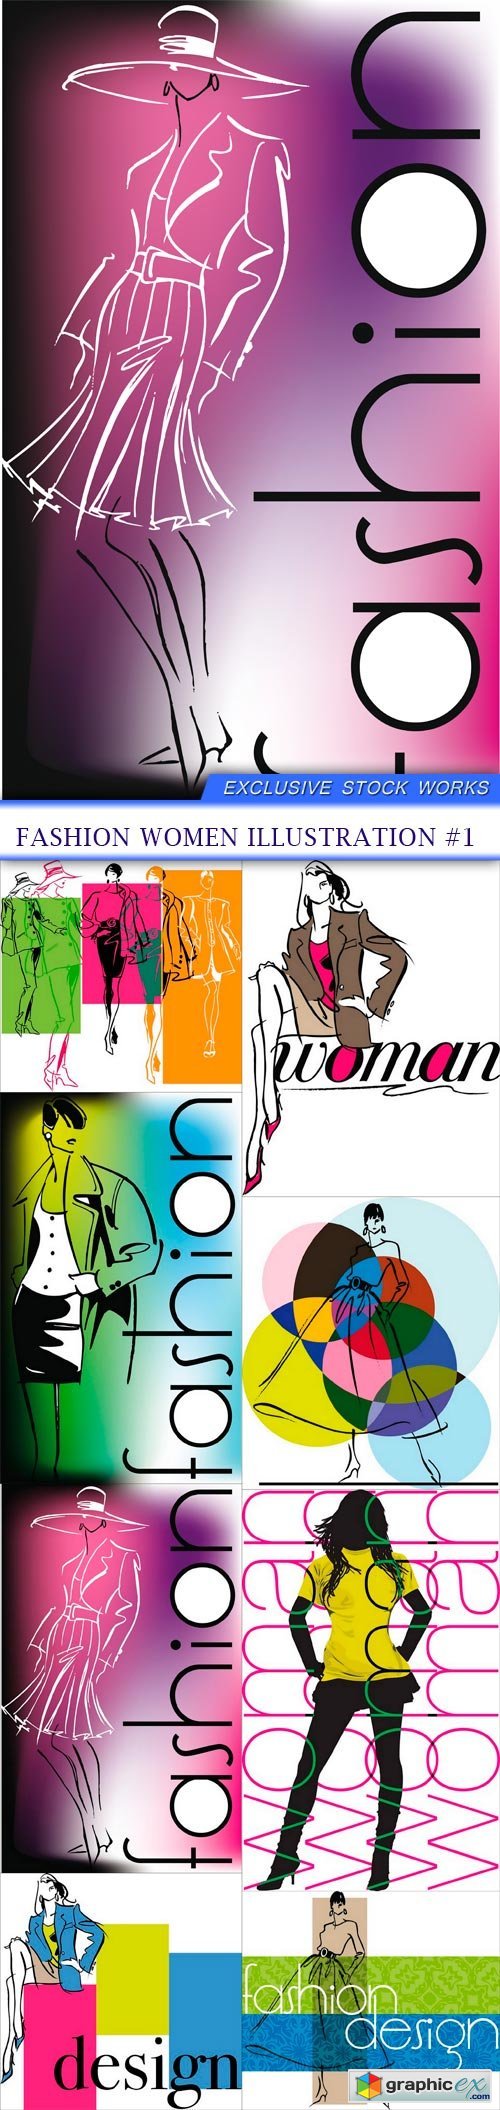 Fashion Women illustration #1 8X EPS